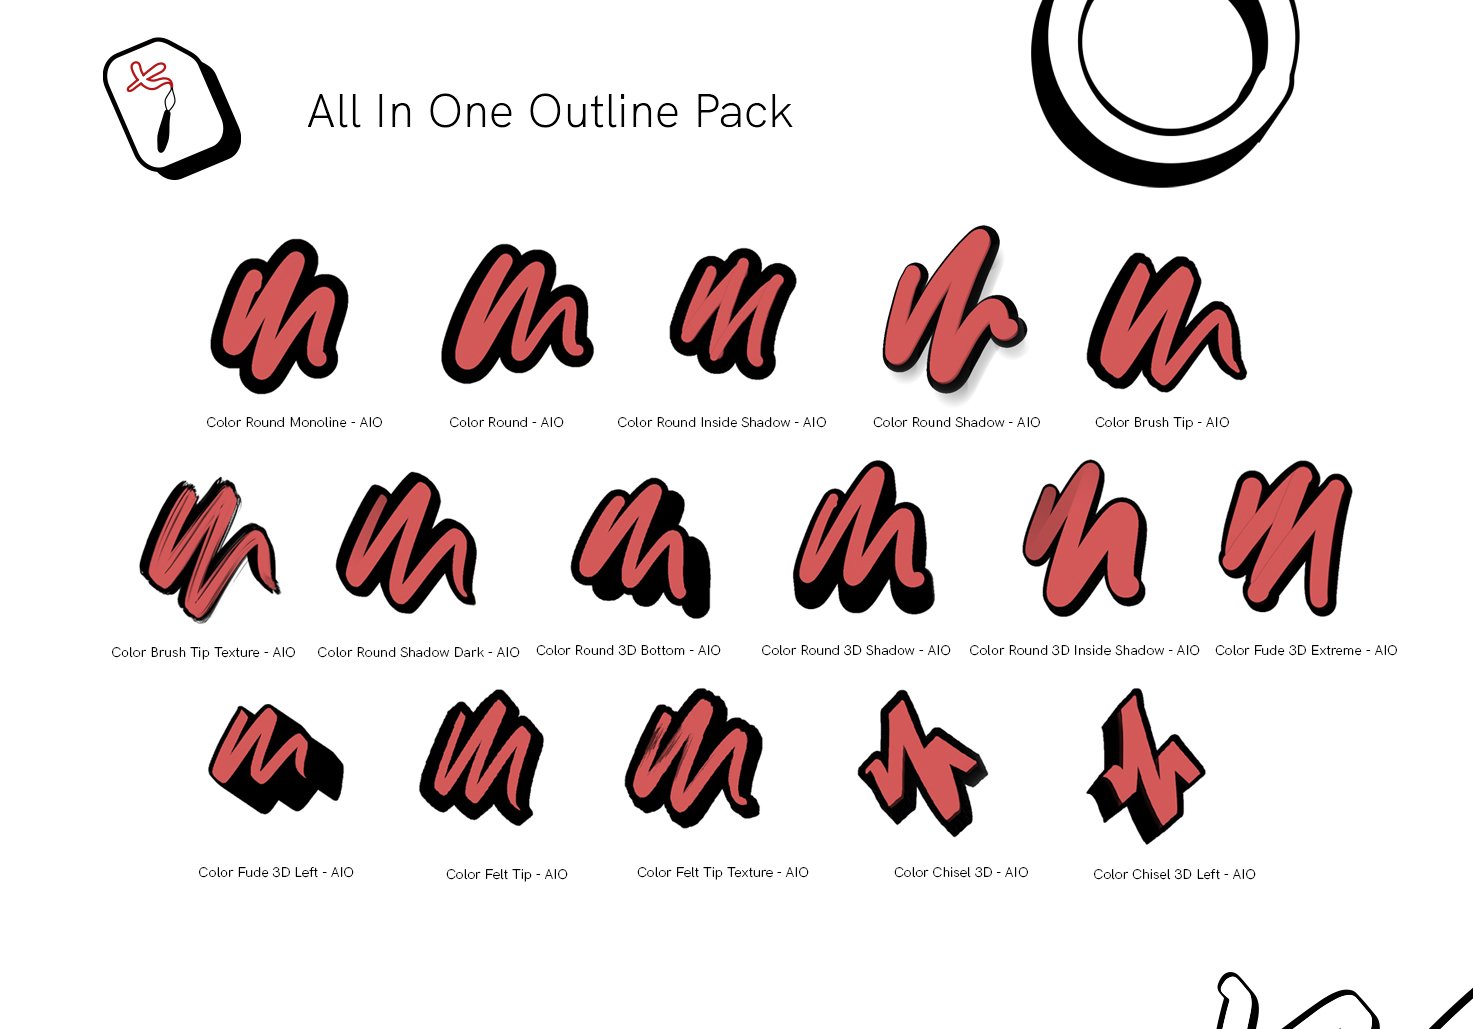 Outline Brushes for Procreate - Outline Pack